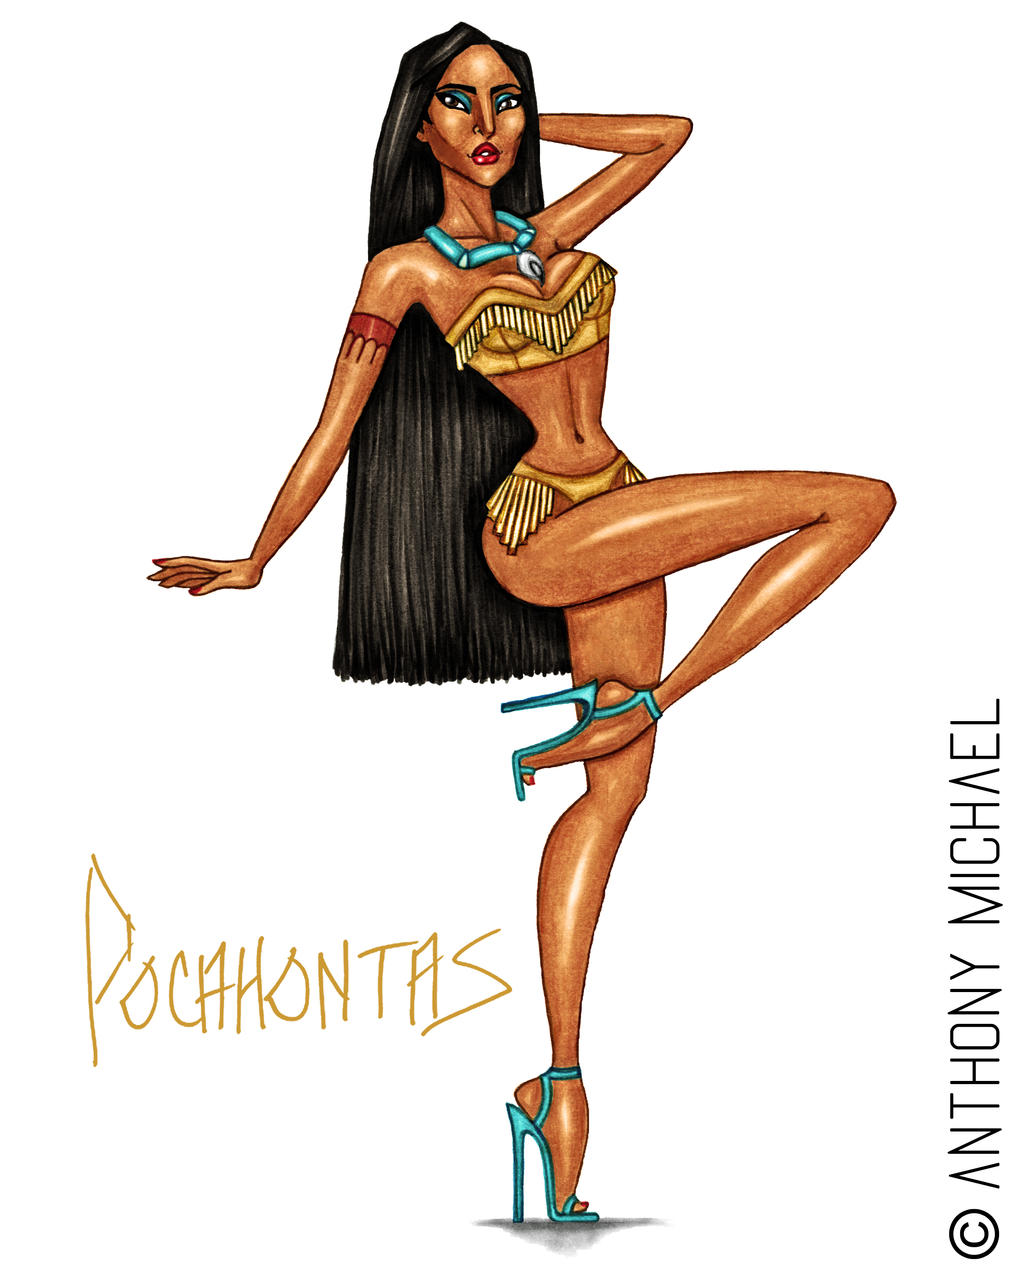 Kinematics lifetime Popular Disney 'Pin-Up' Princess, Pocahontas by Anth0nyM1cha3l on DeviantArt